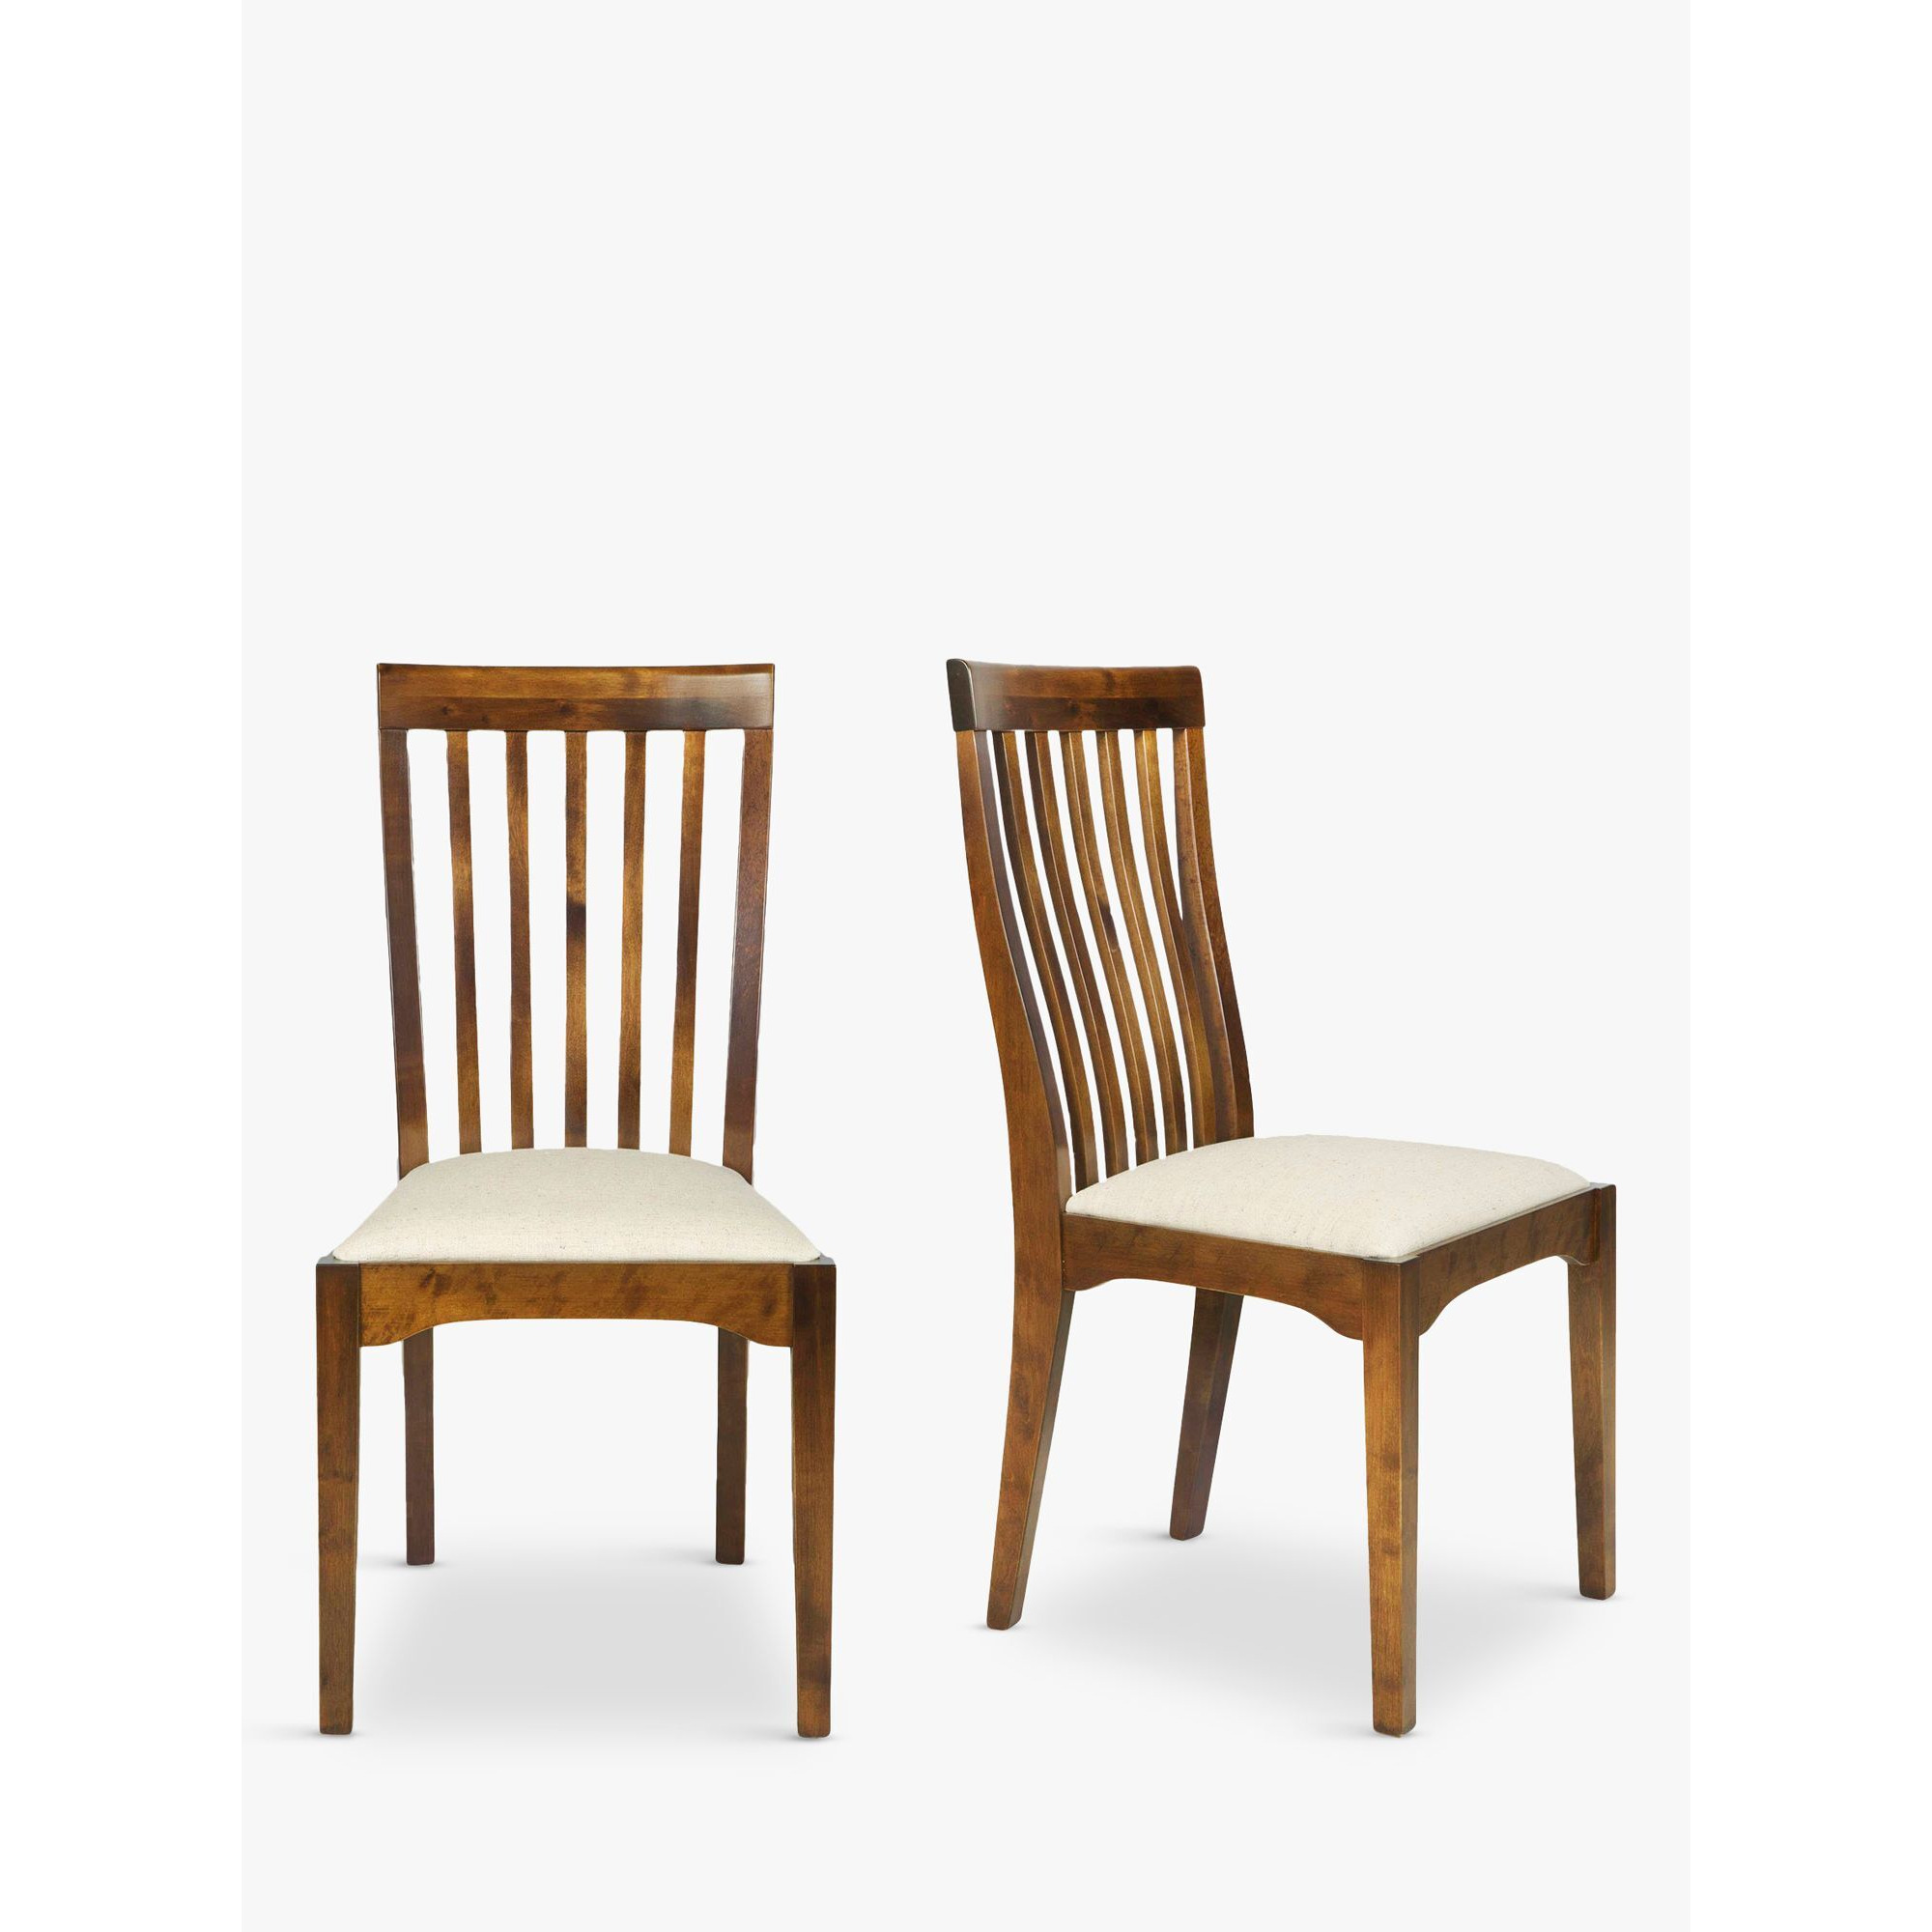 Laura Ashley Garrat Dining Chairs, Set of 2, Dark Brown - image 1